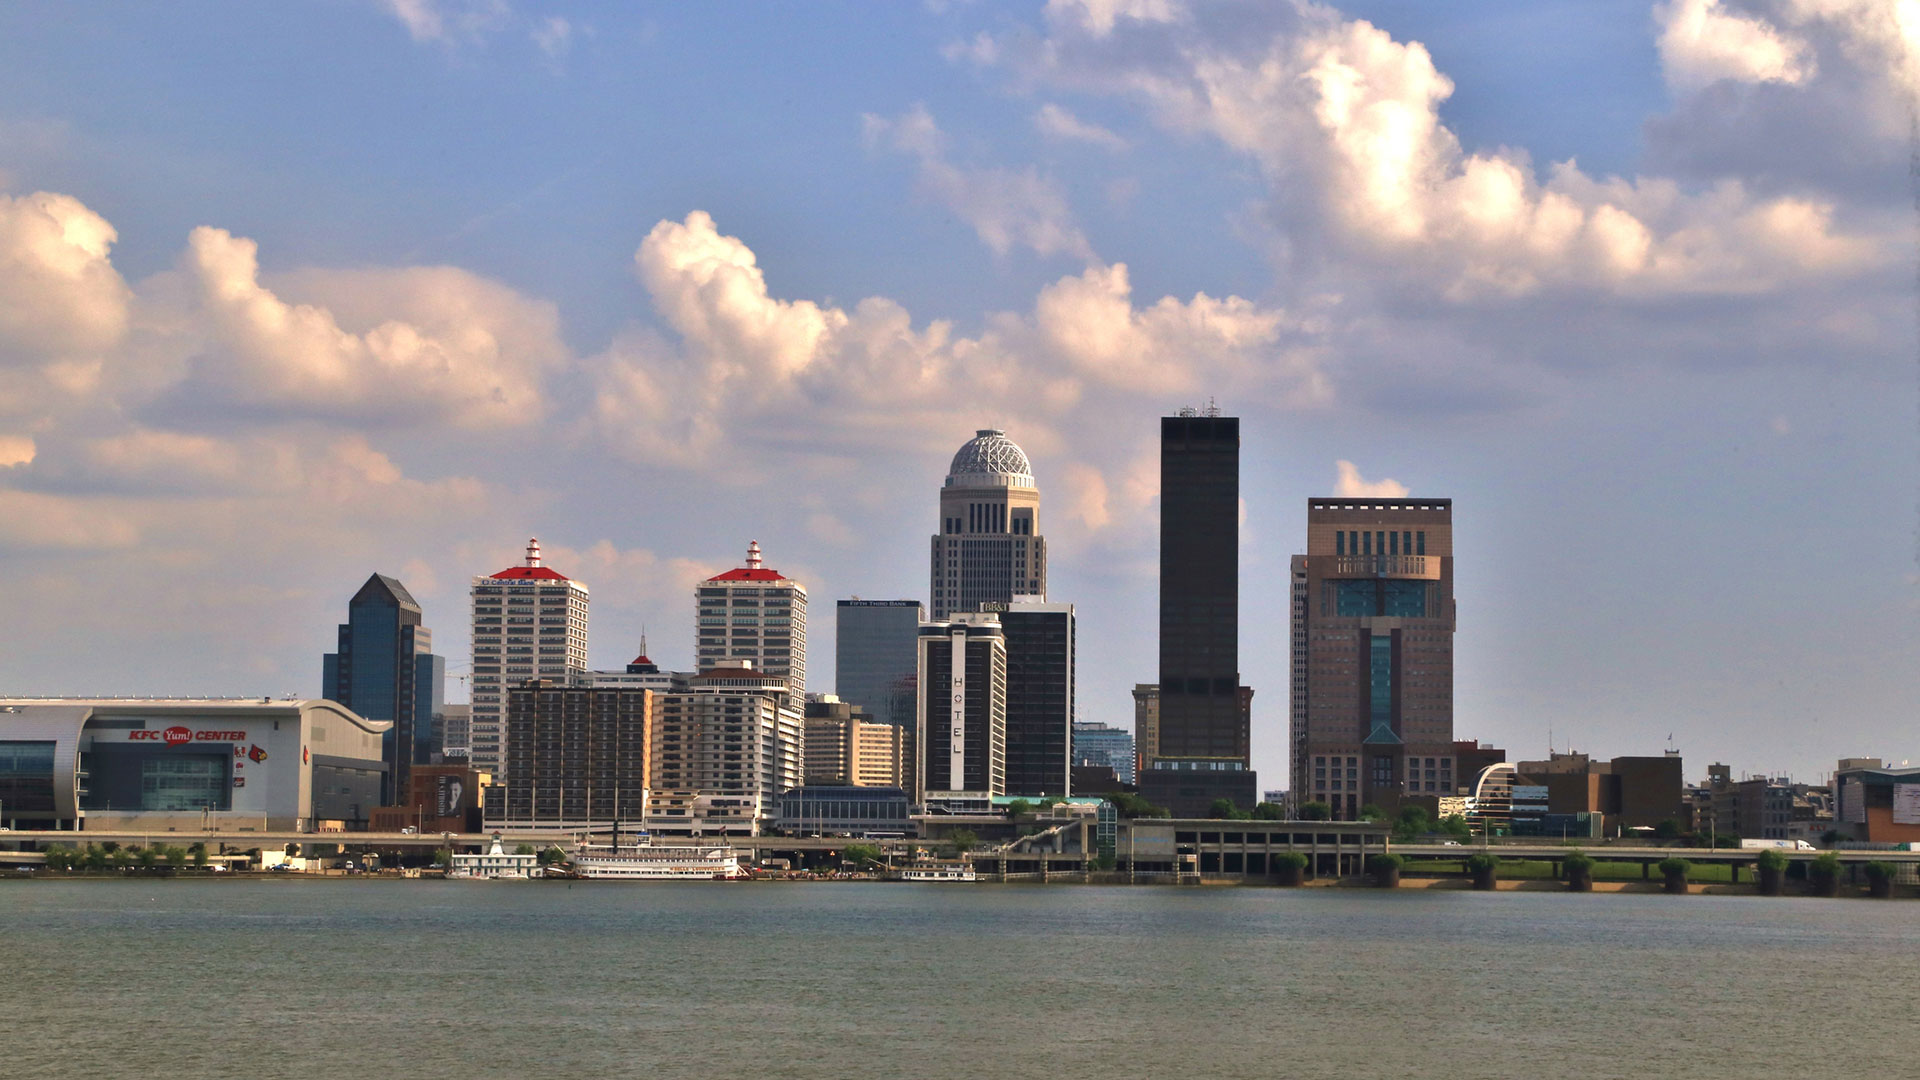 In Louisville, Kentucky, the median home price is $290,000.